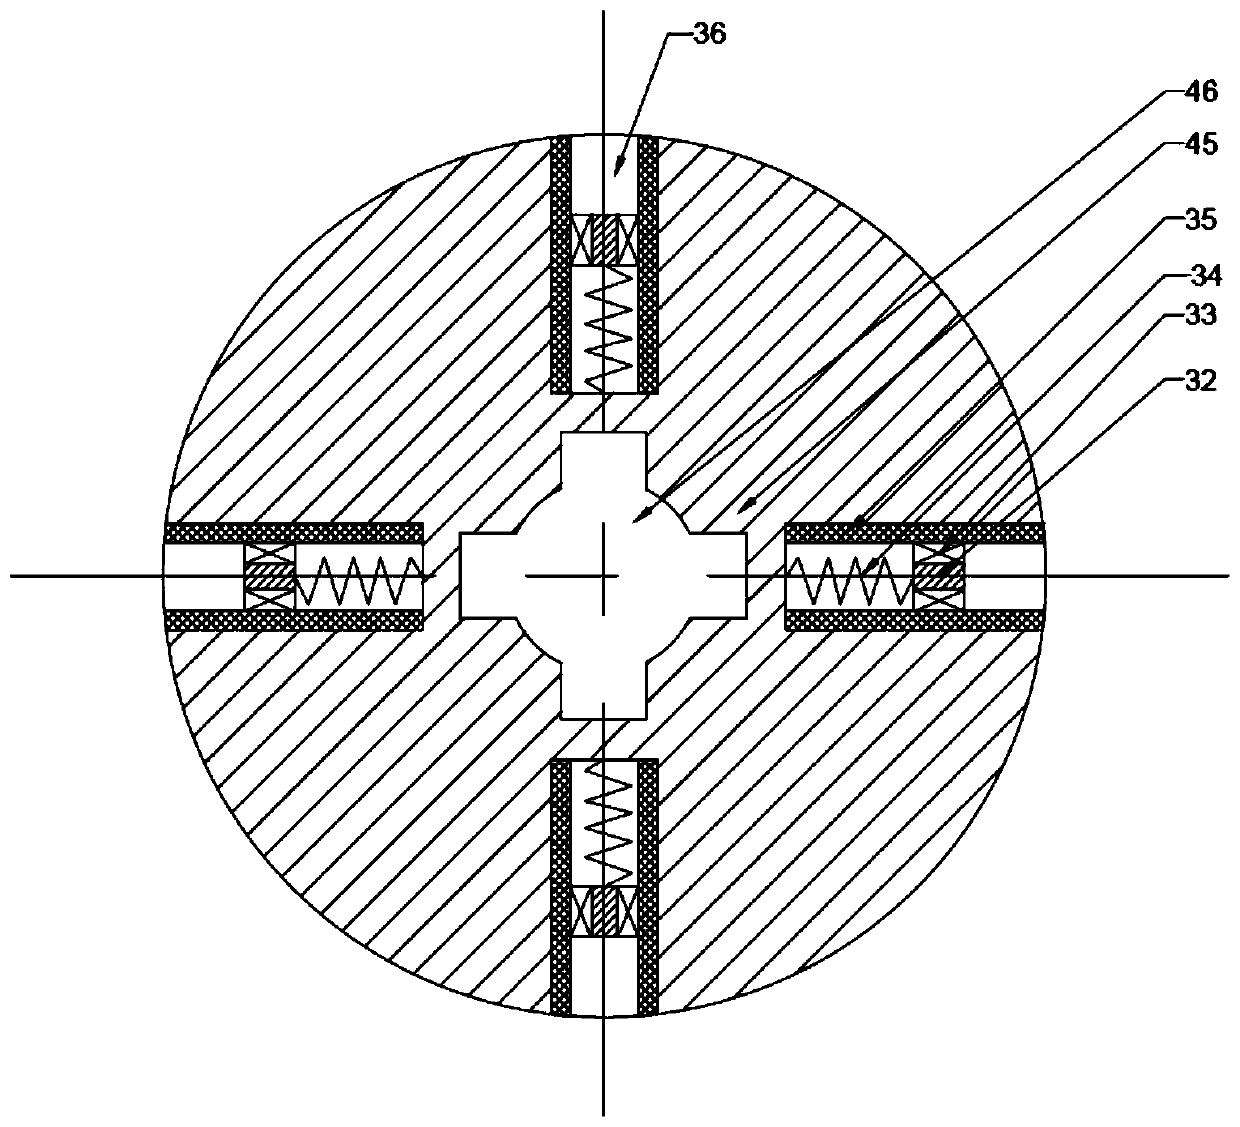 Semi-active control variable inertia dual mass flywheel based on magnetorheological fluid